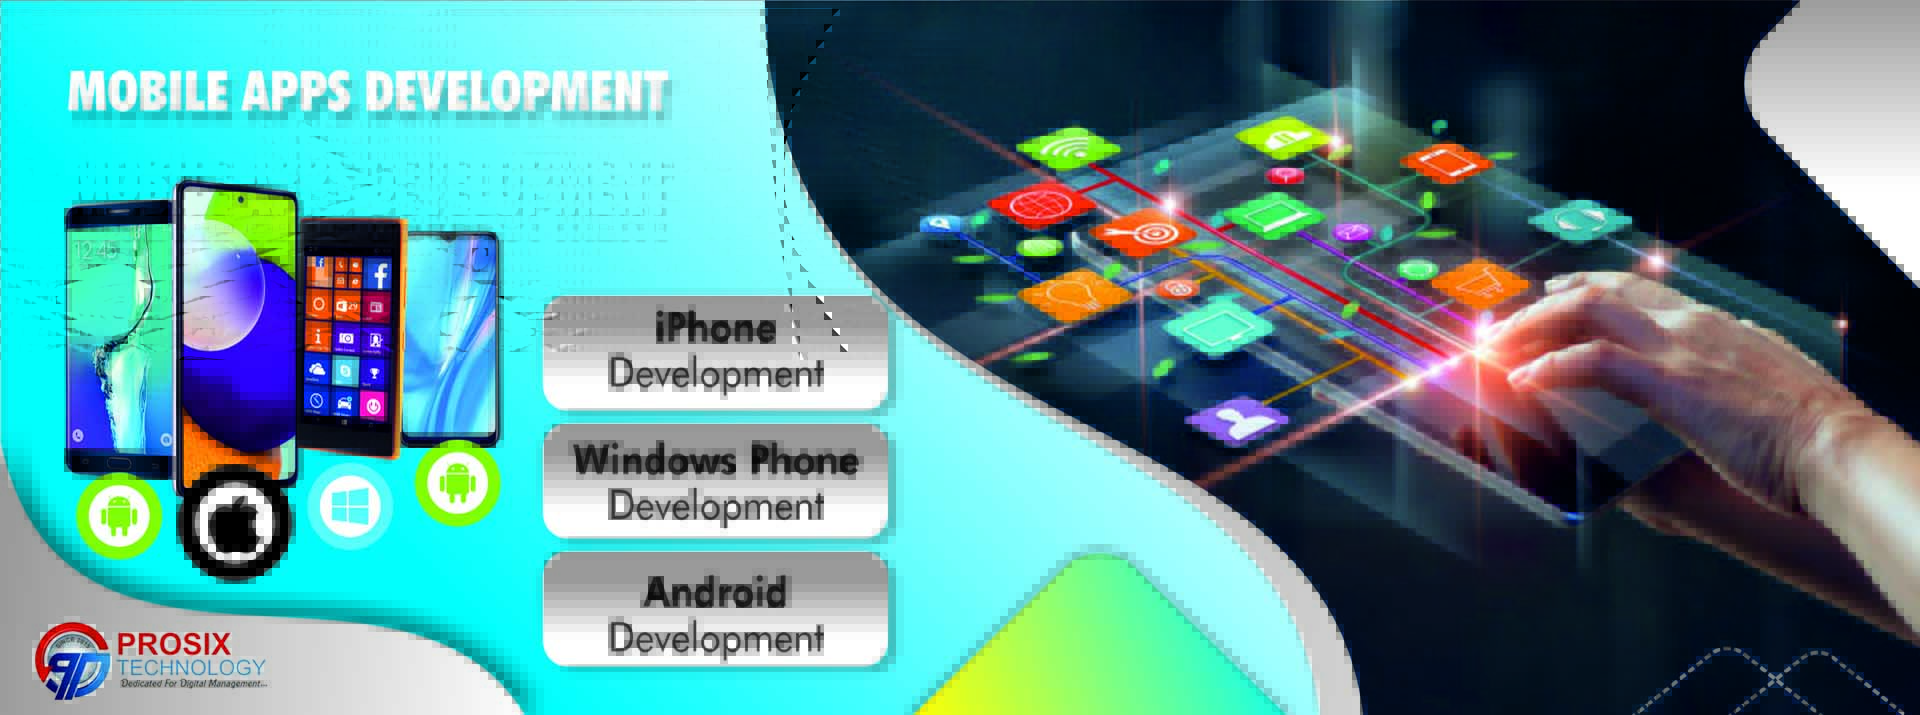 Mobile App Development- Prosix Technology